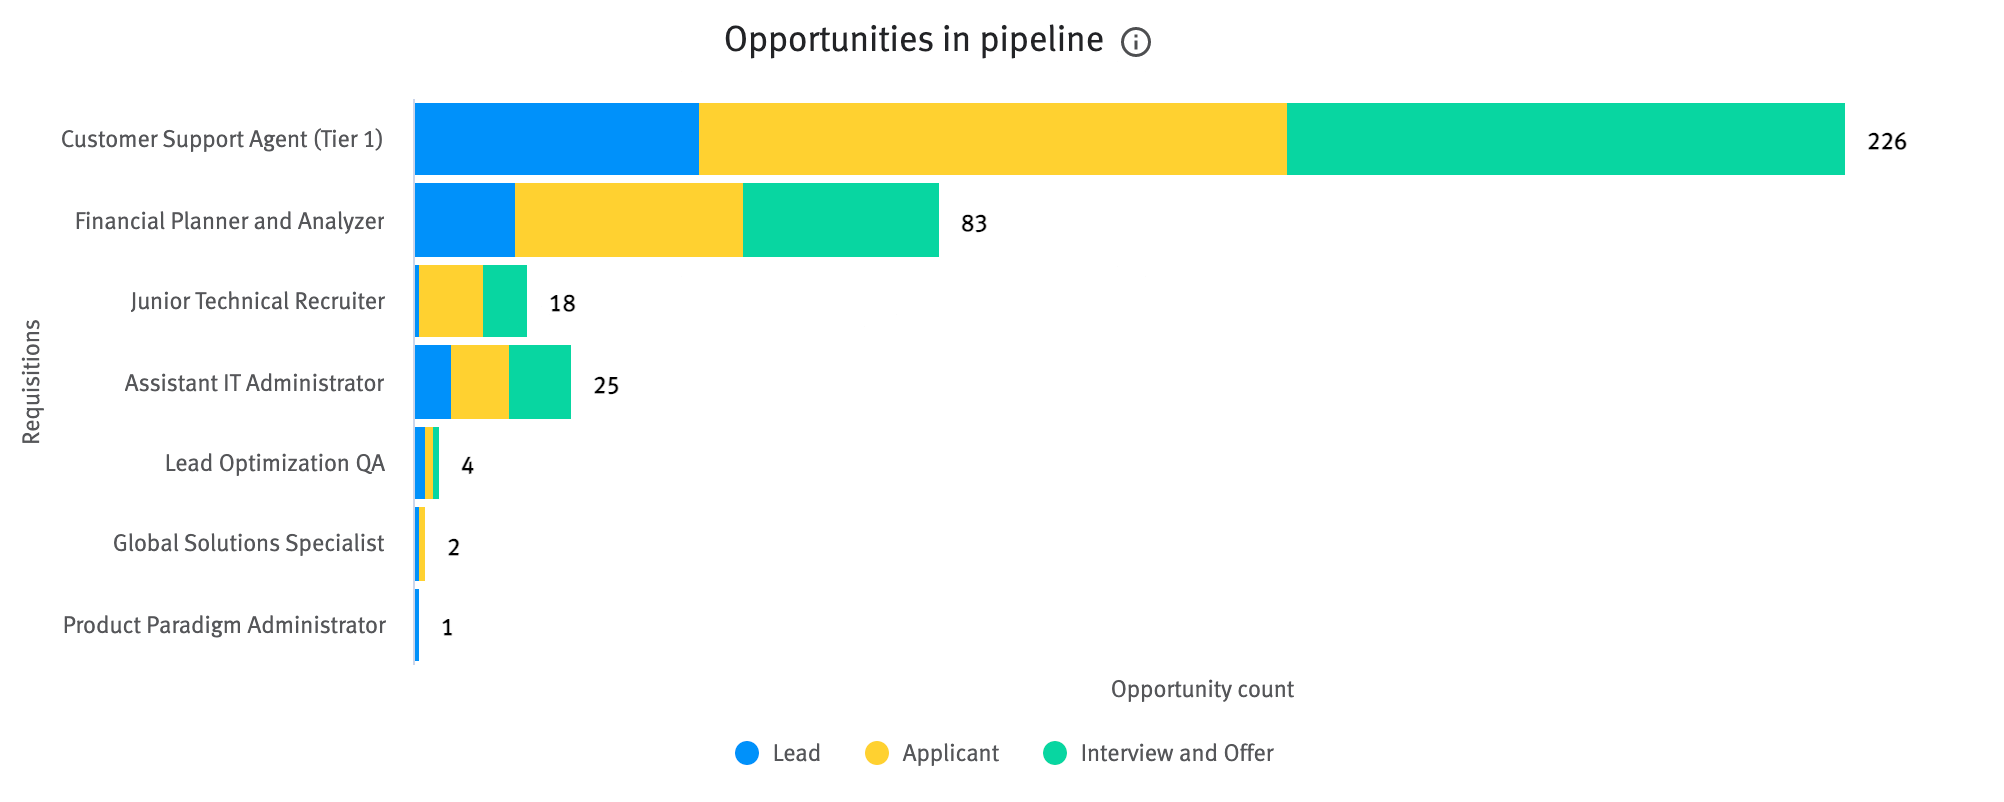 Opportunities in pipeline chart